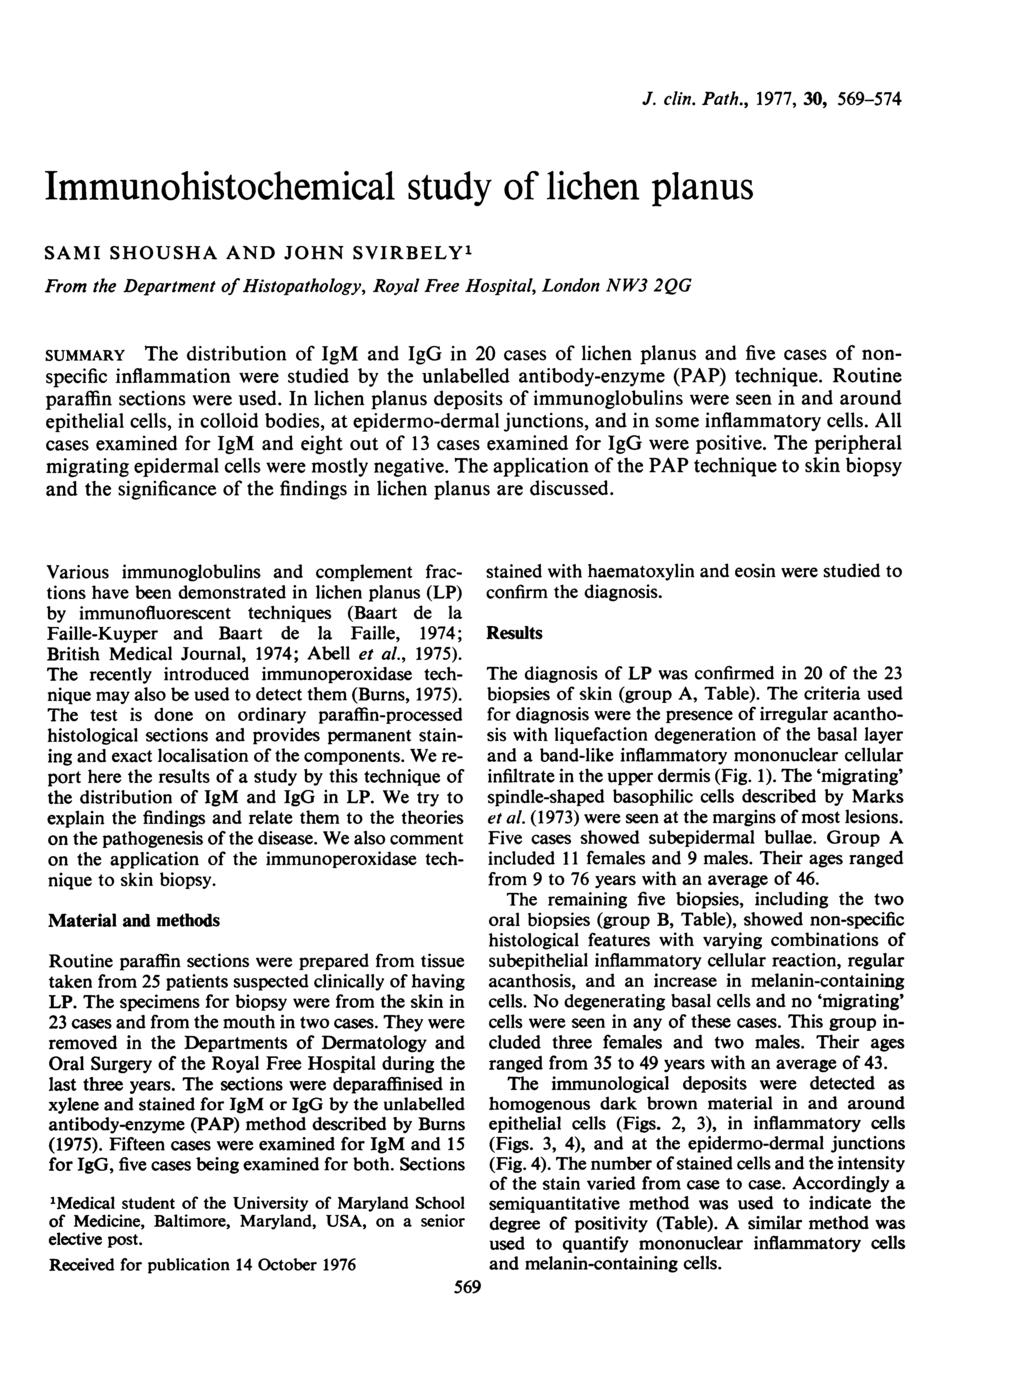 Immunohistochemical study of lichen planus SAI SHOUSHA AND JOHN SVIRBELY1 rom the Department of Histopathology, Royal ree Hospital, London NW3 2QG J. clin. Path.